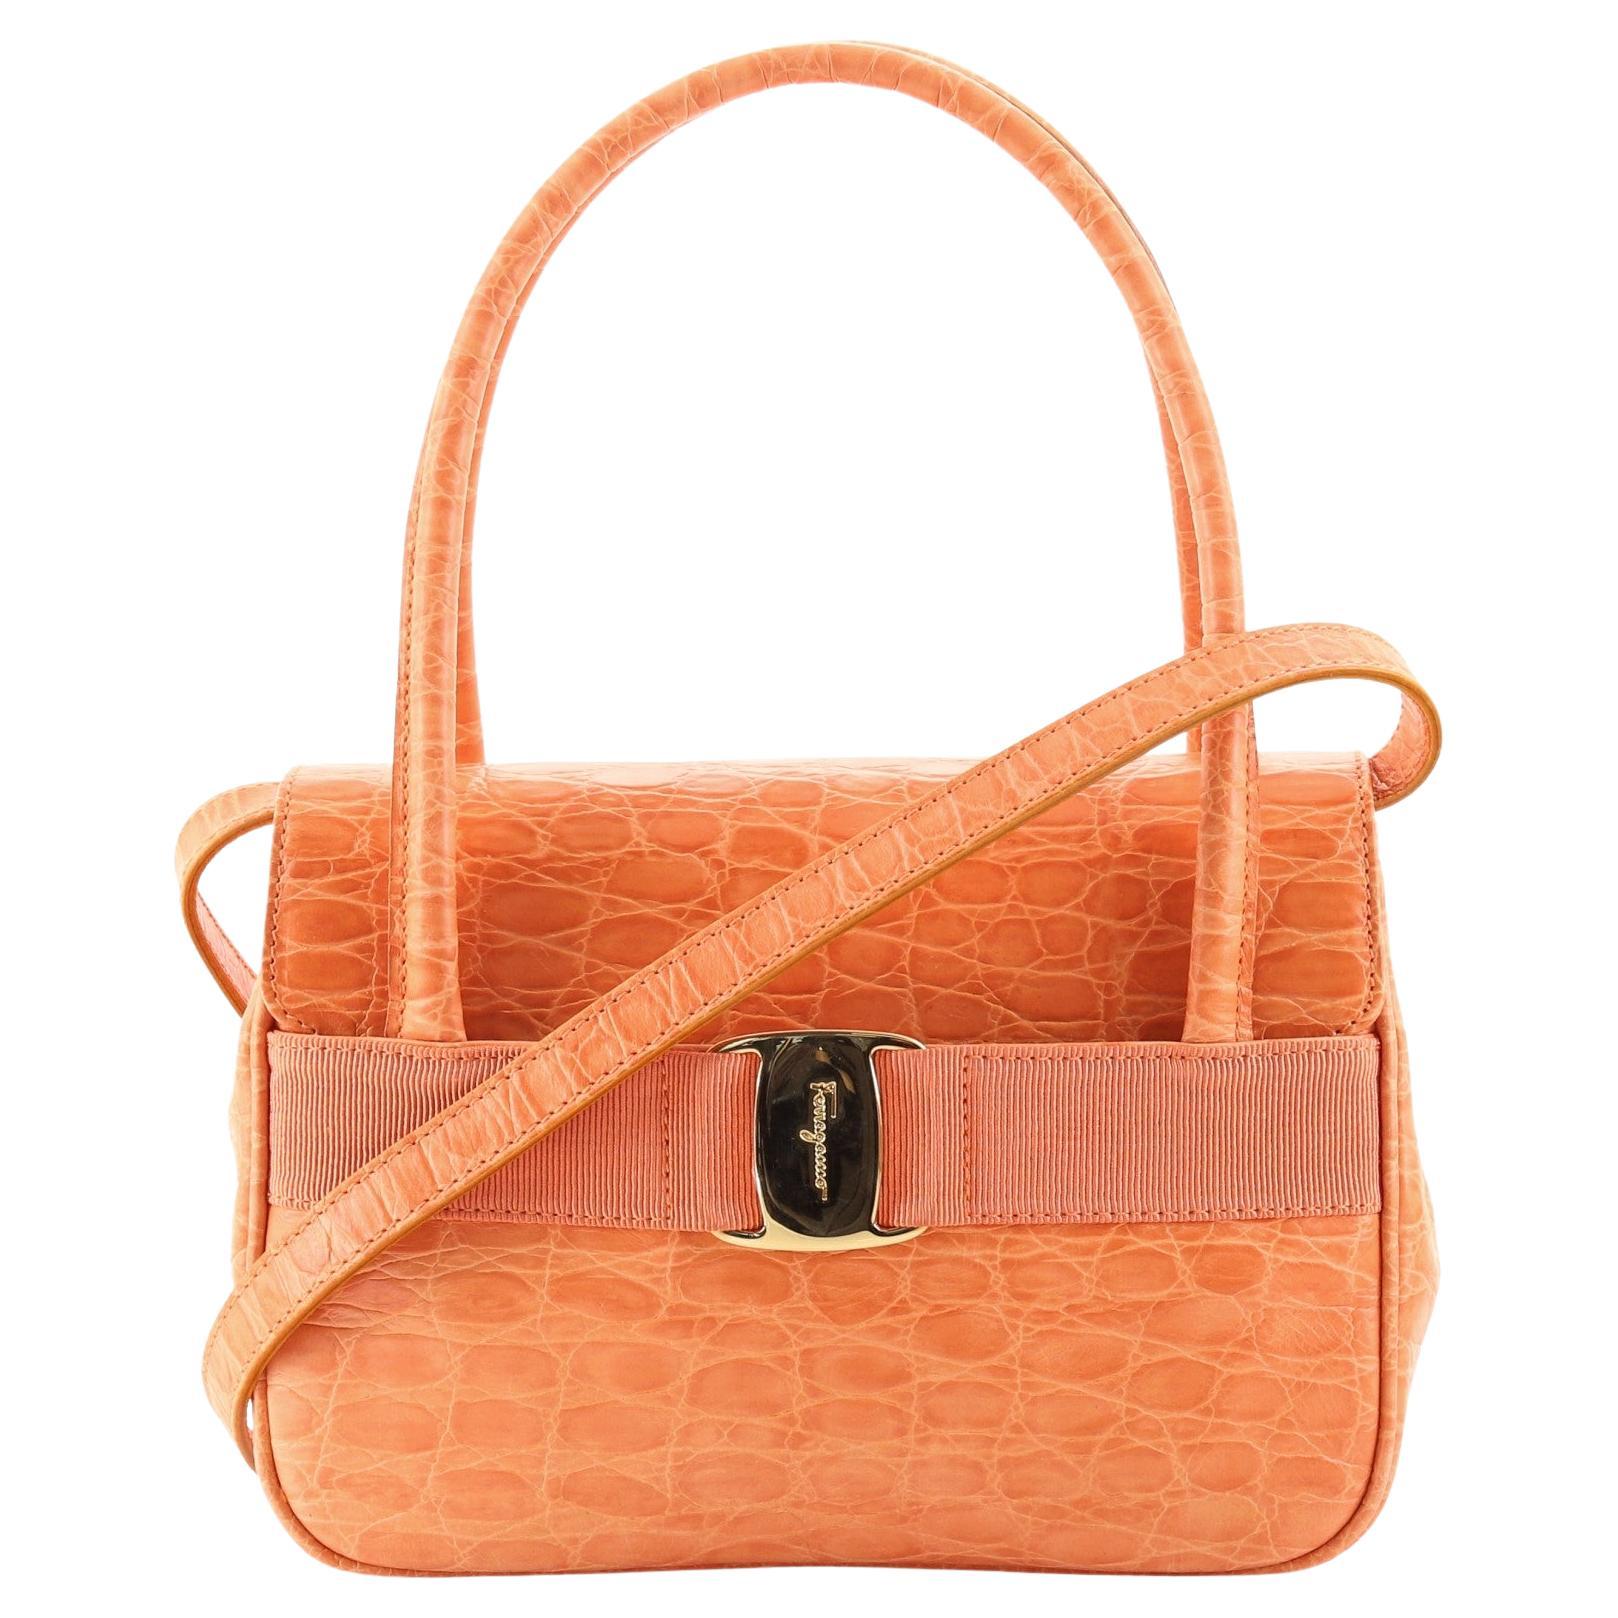 Convertible Executive Leather Bag in Crocodile Print Orange Crush